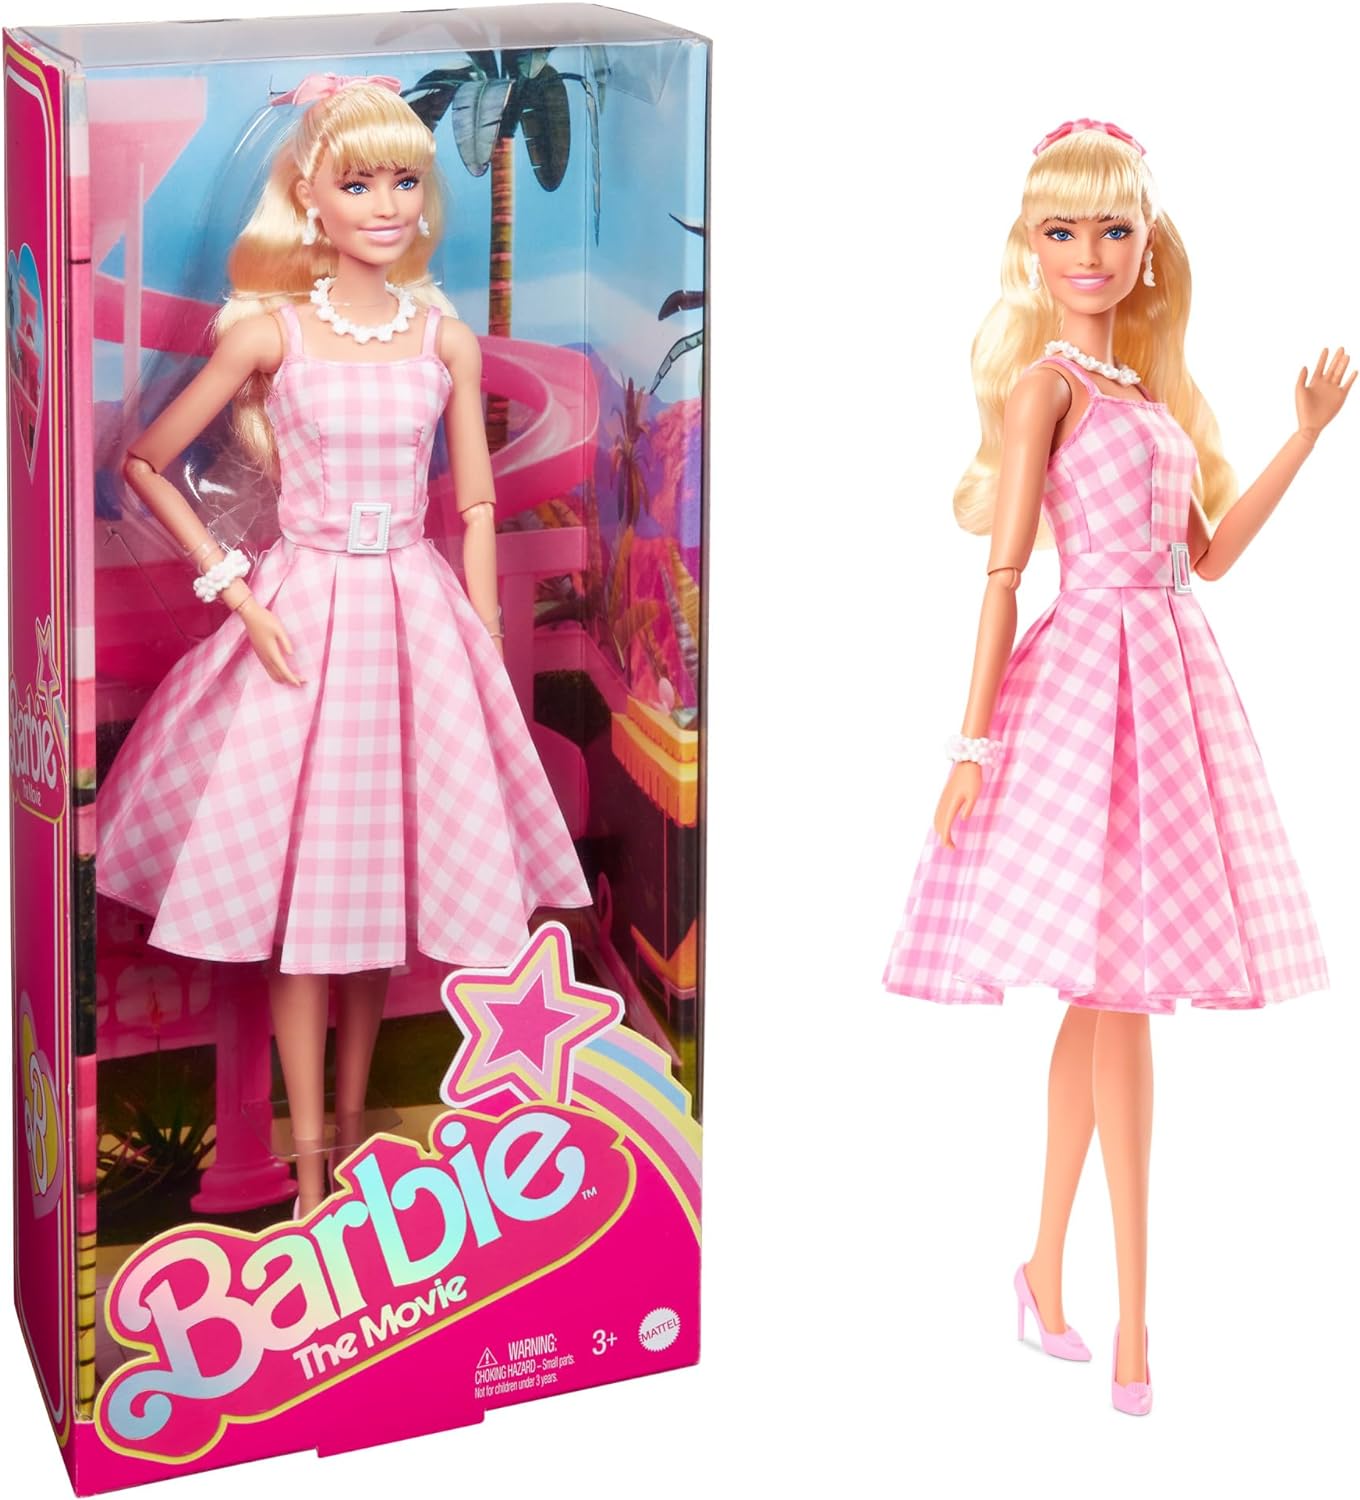 Barbie The Movie abito rosa